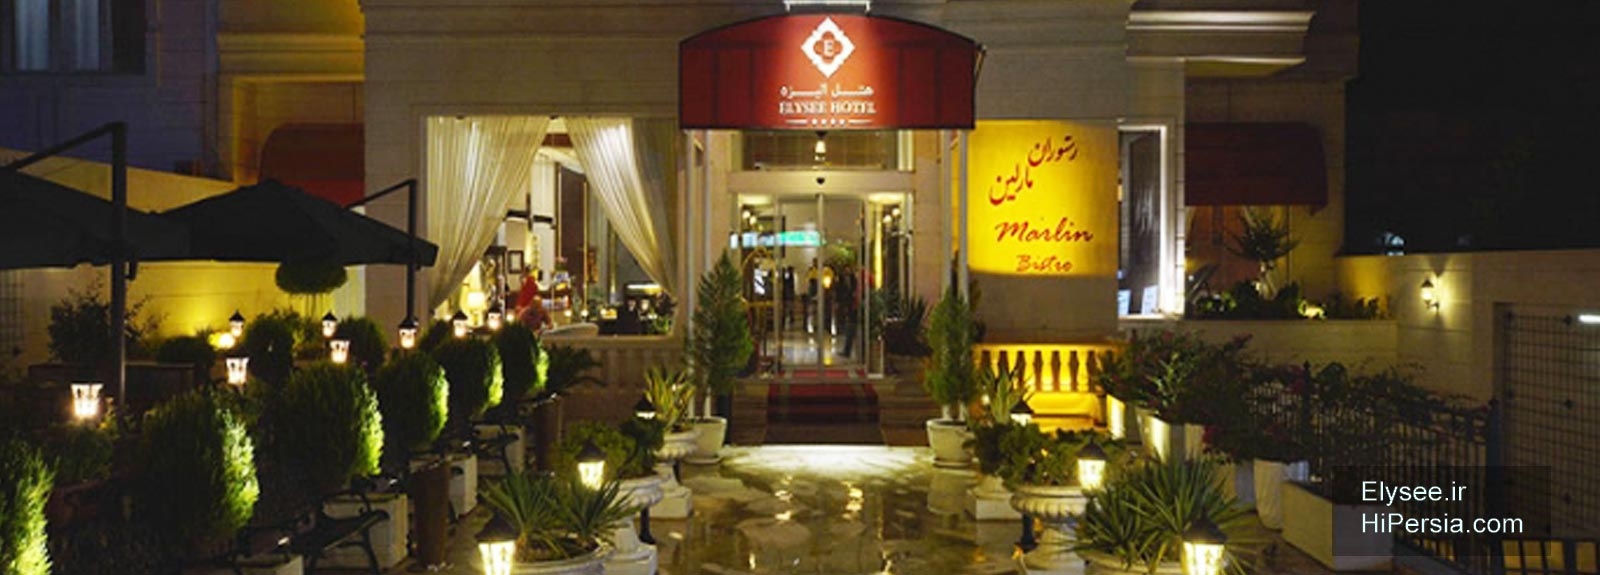 Elysee Hotel Shiraz-4 stars